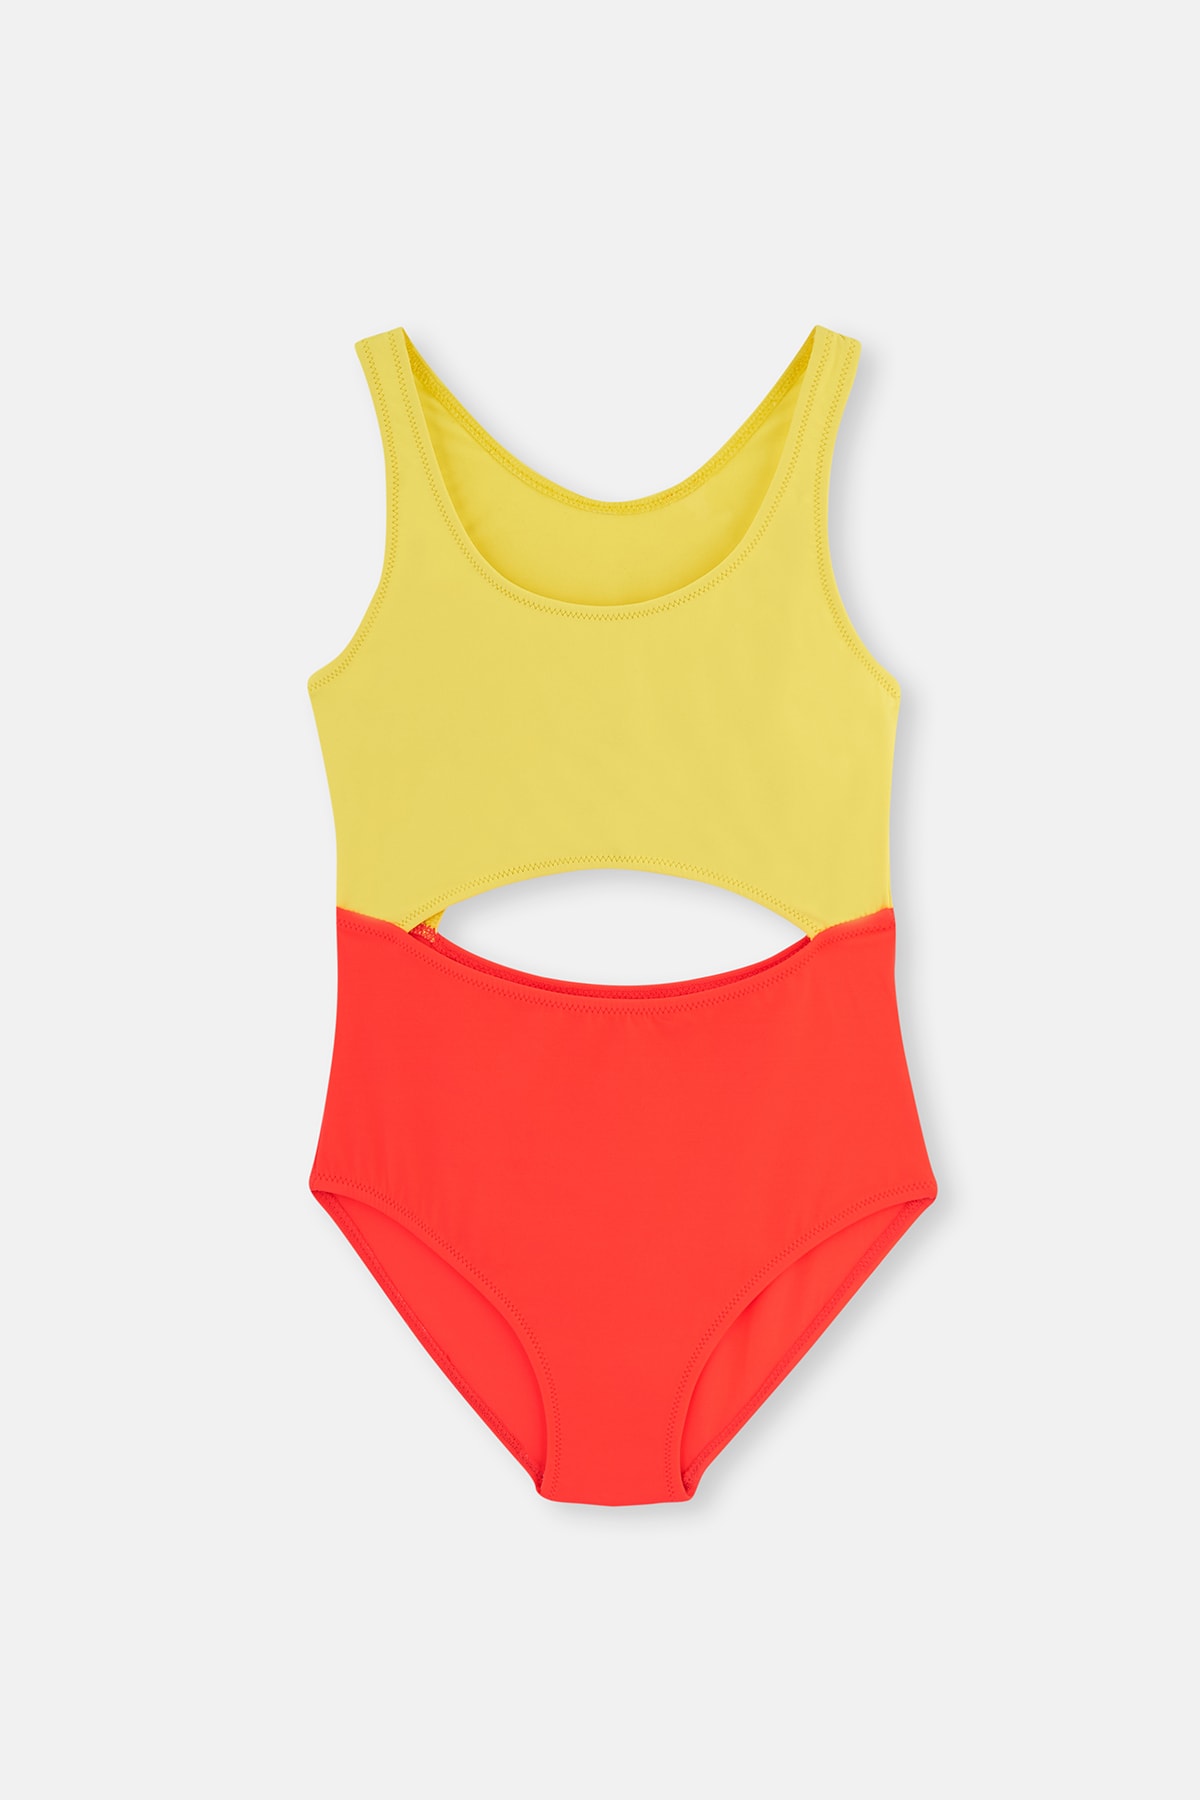 Dagi Yellow - Fuchsia One Piece Swimsuit